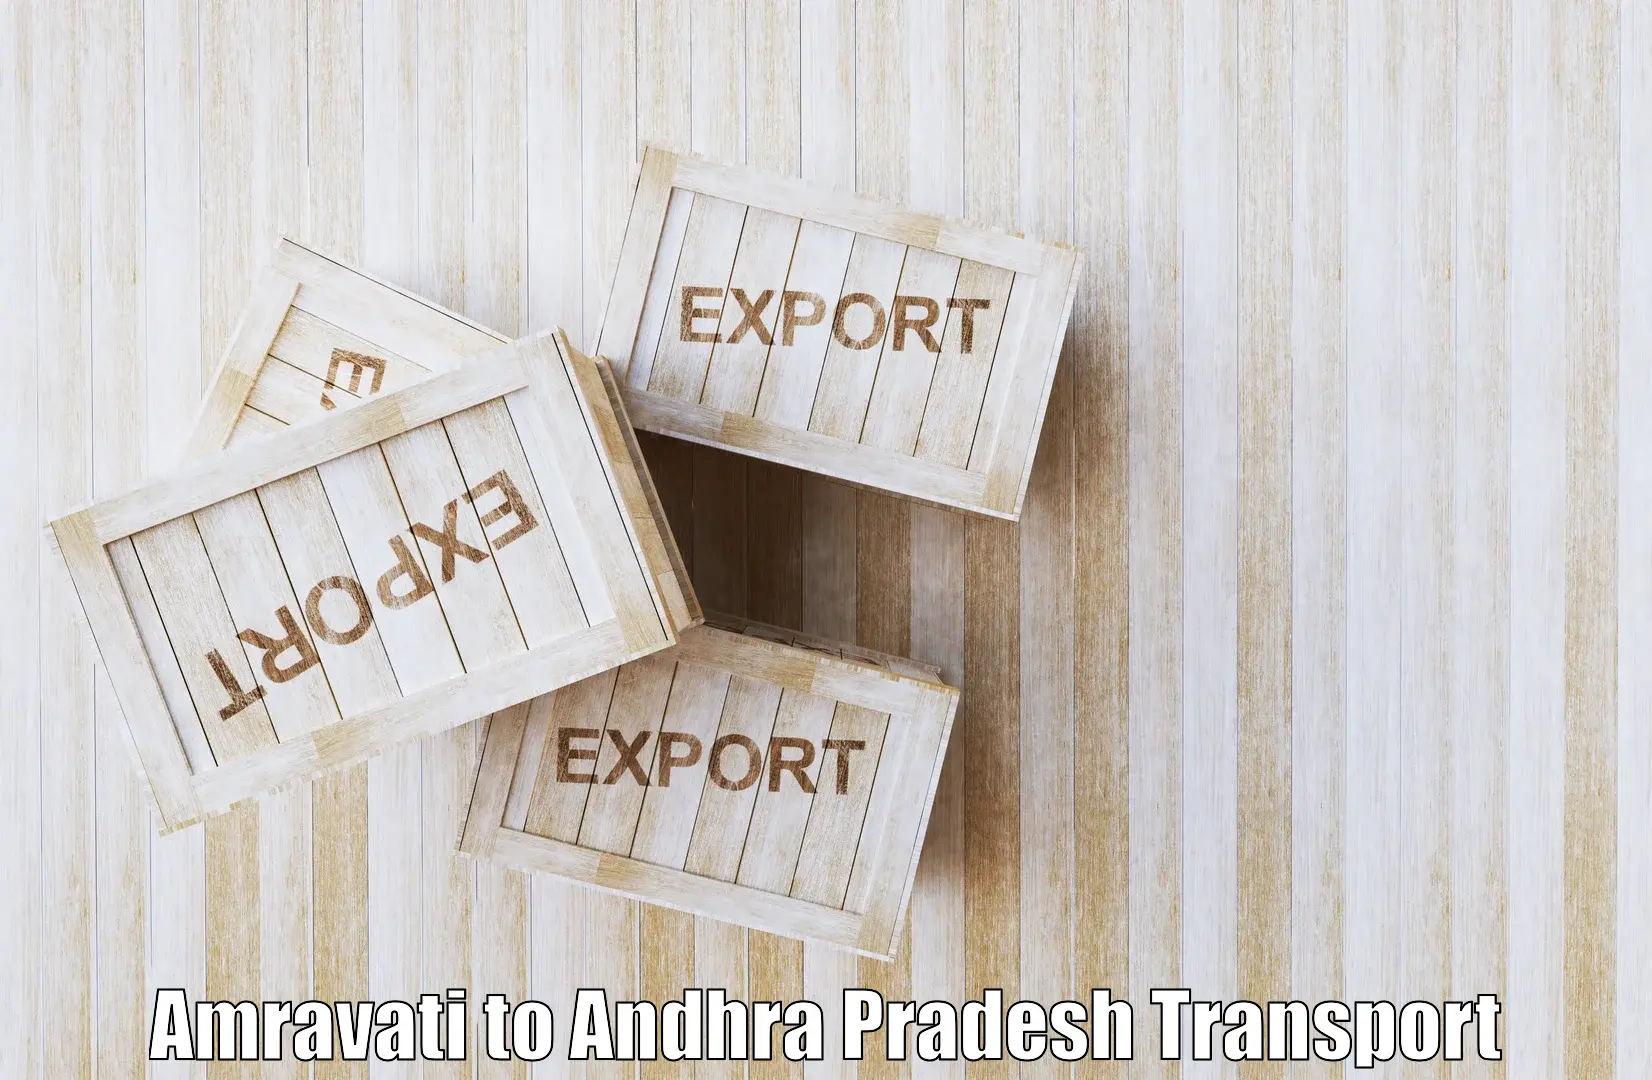 Transport in sharing Amravati to Dachepalle